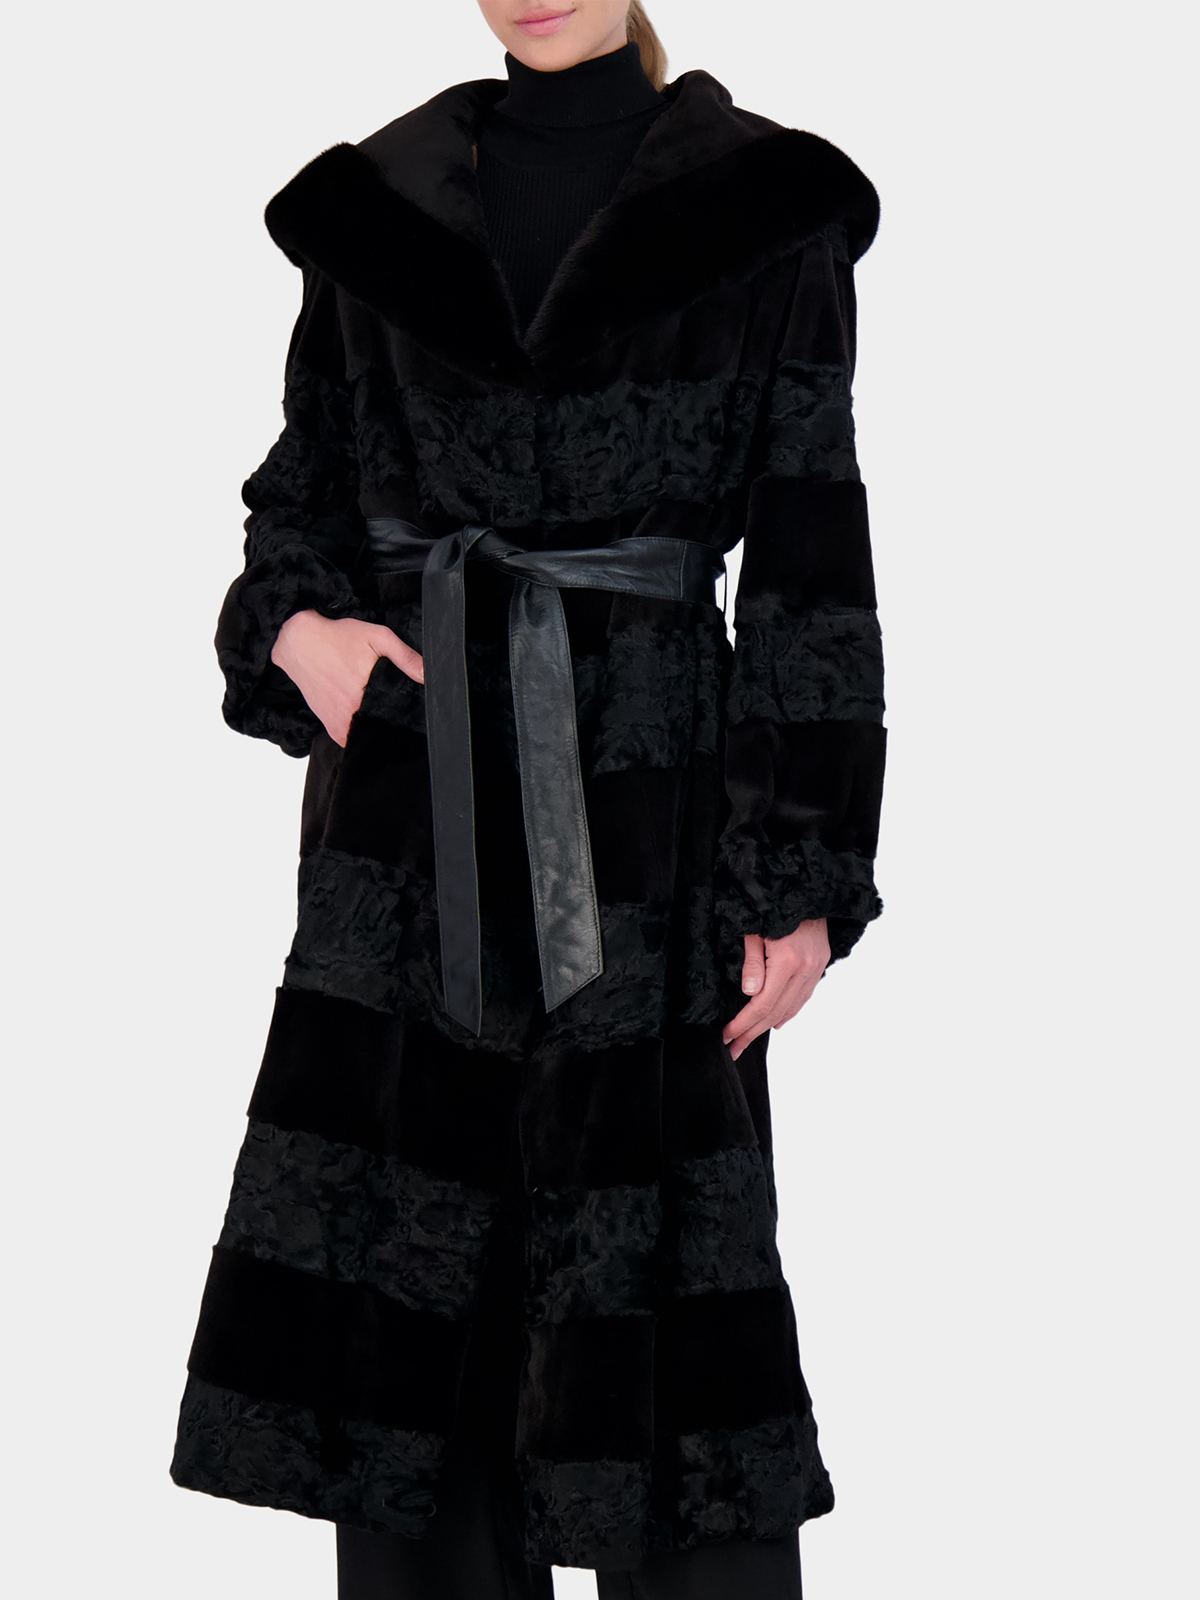 Woman's Gorski Black Persian Lamb Fur Coat with Mink Trim